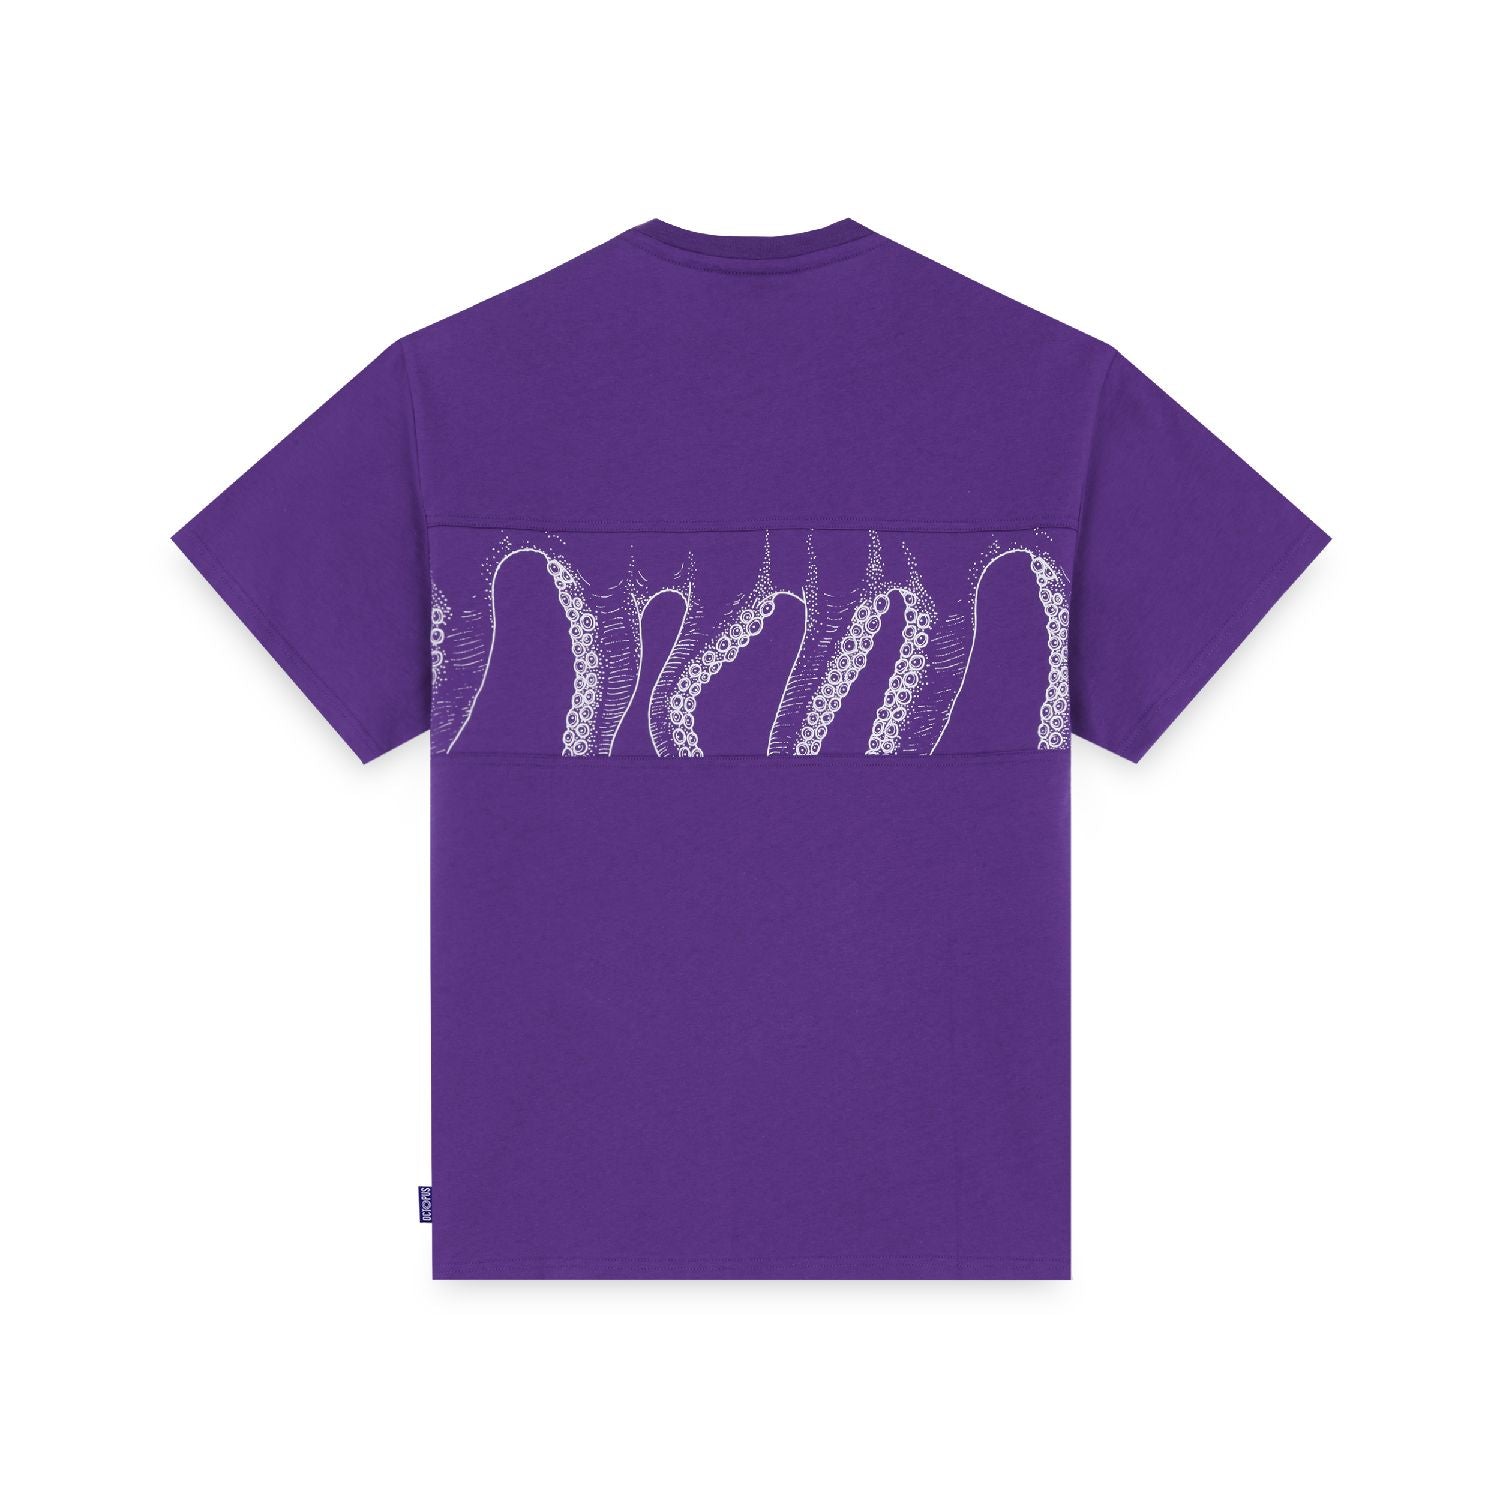 Octopus uomo t-shirt band 23WOTS20